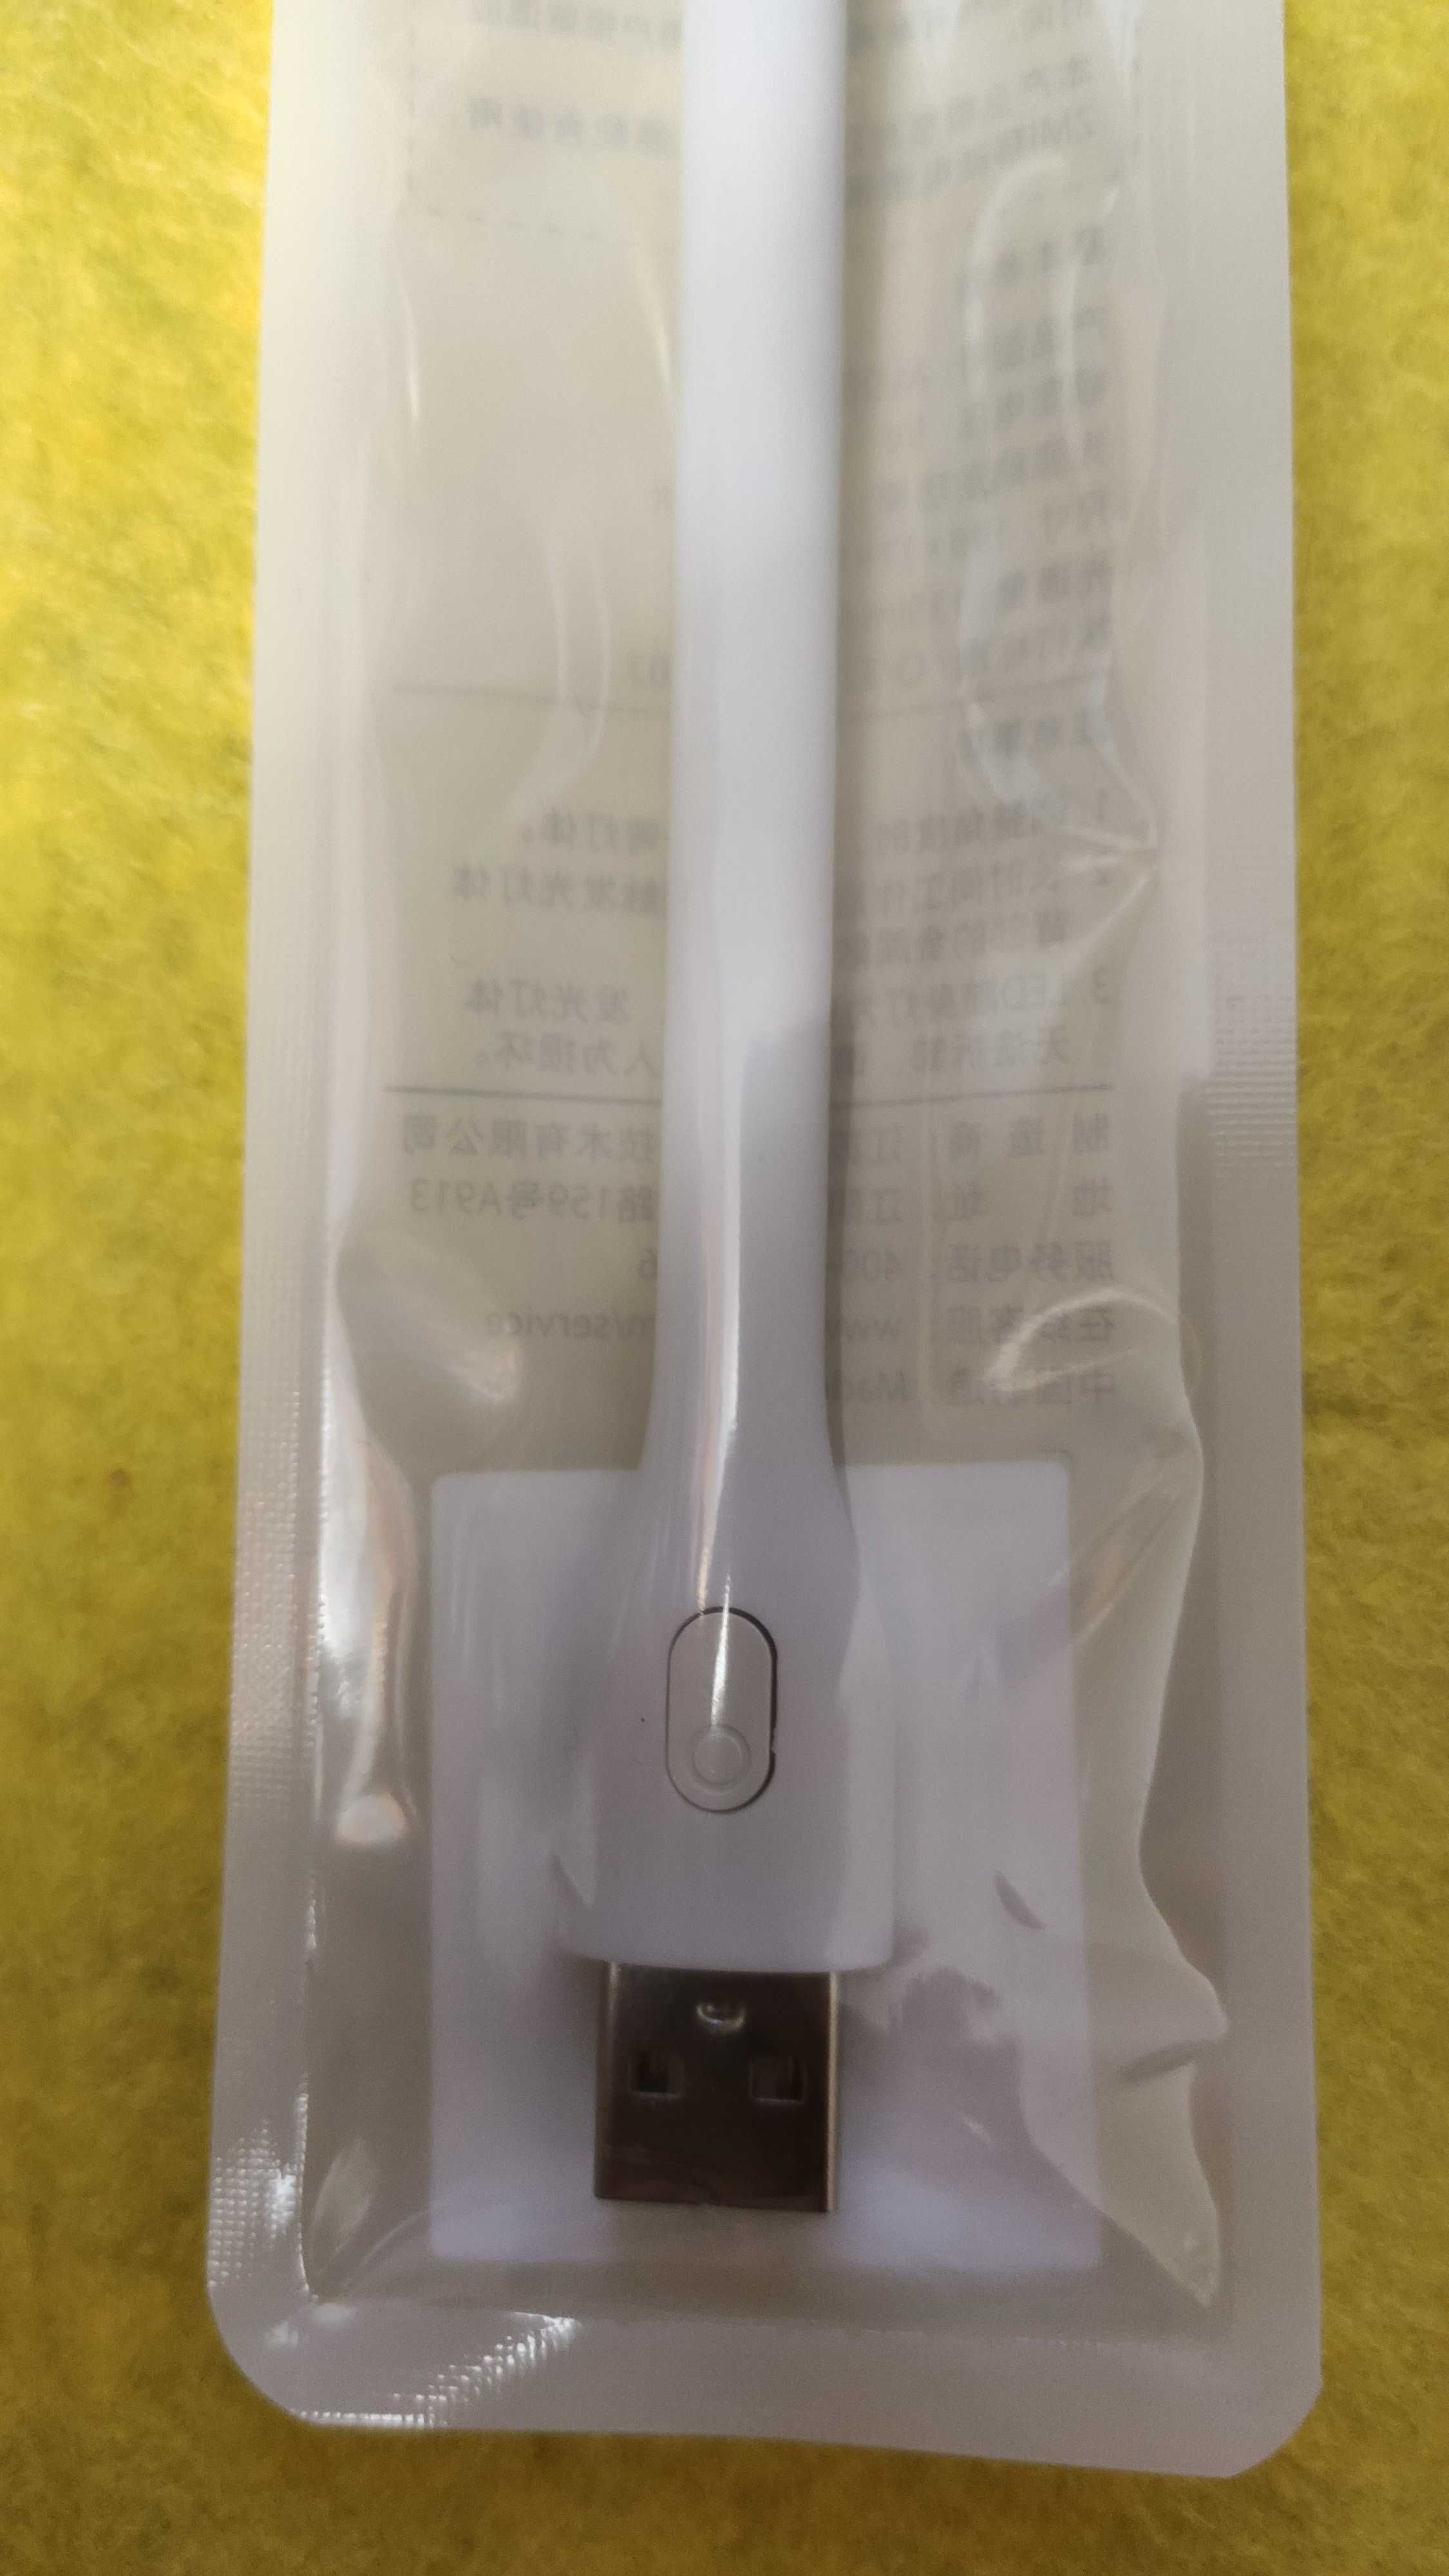 USB LED лампа Xiaomi ZMI Portable оригинал